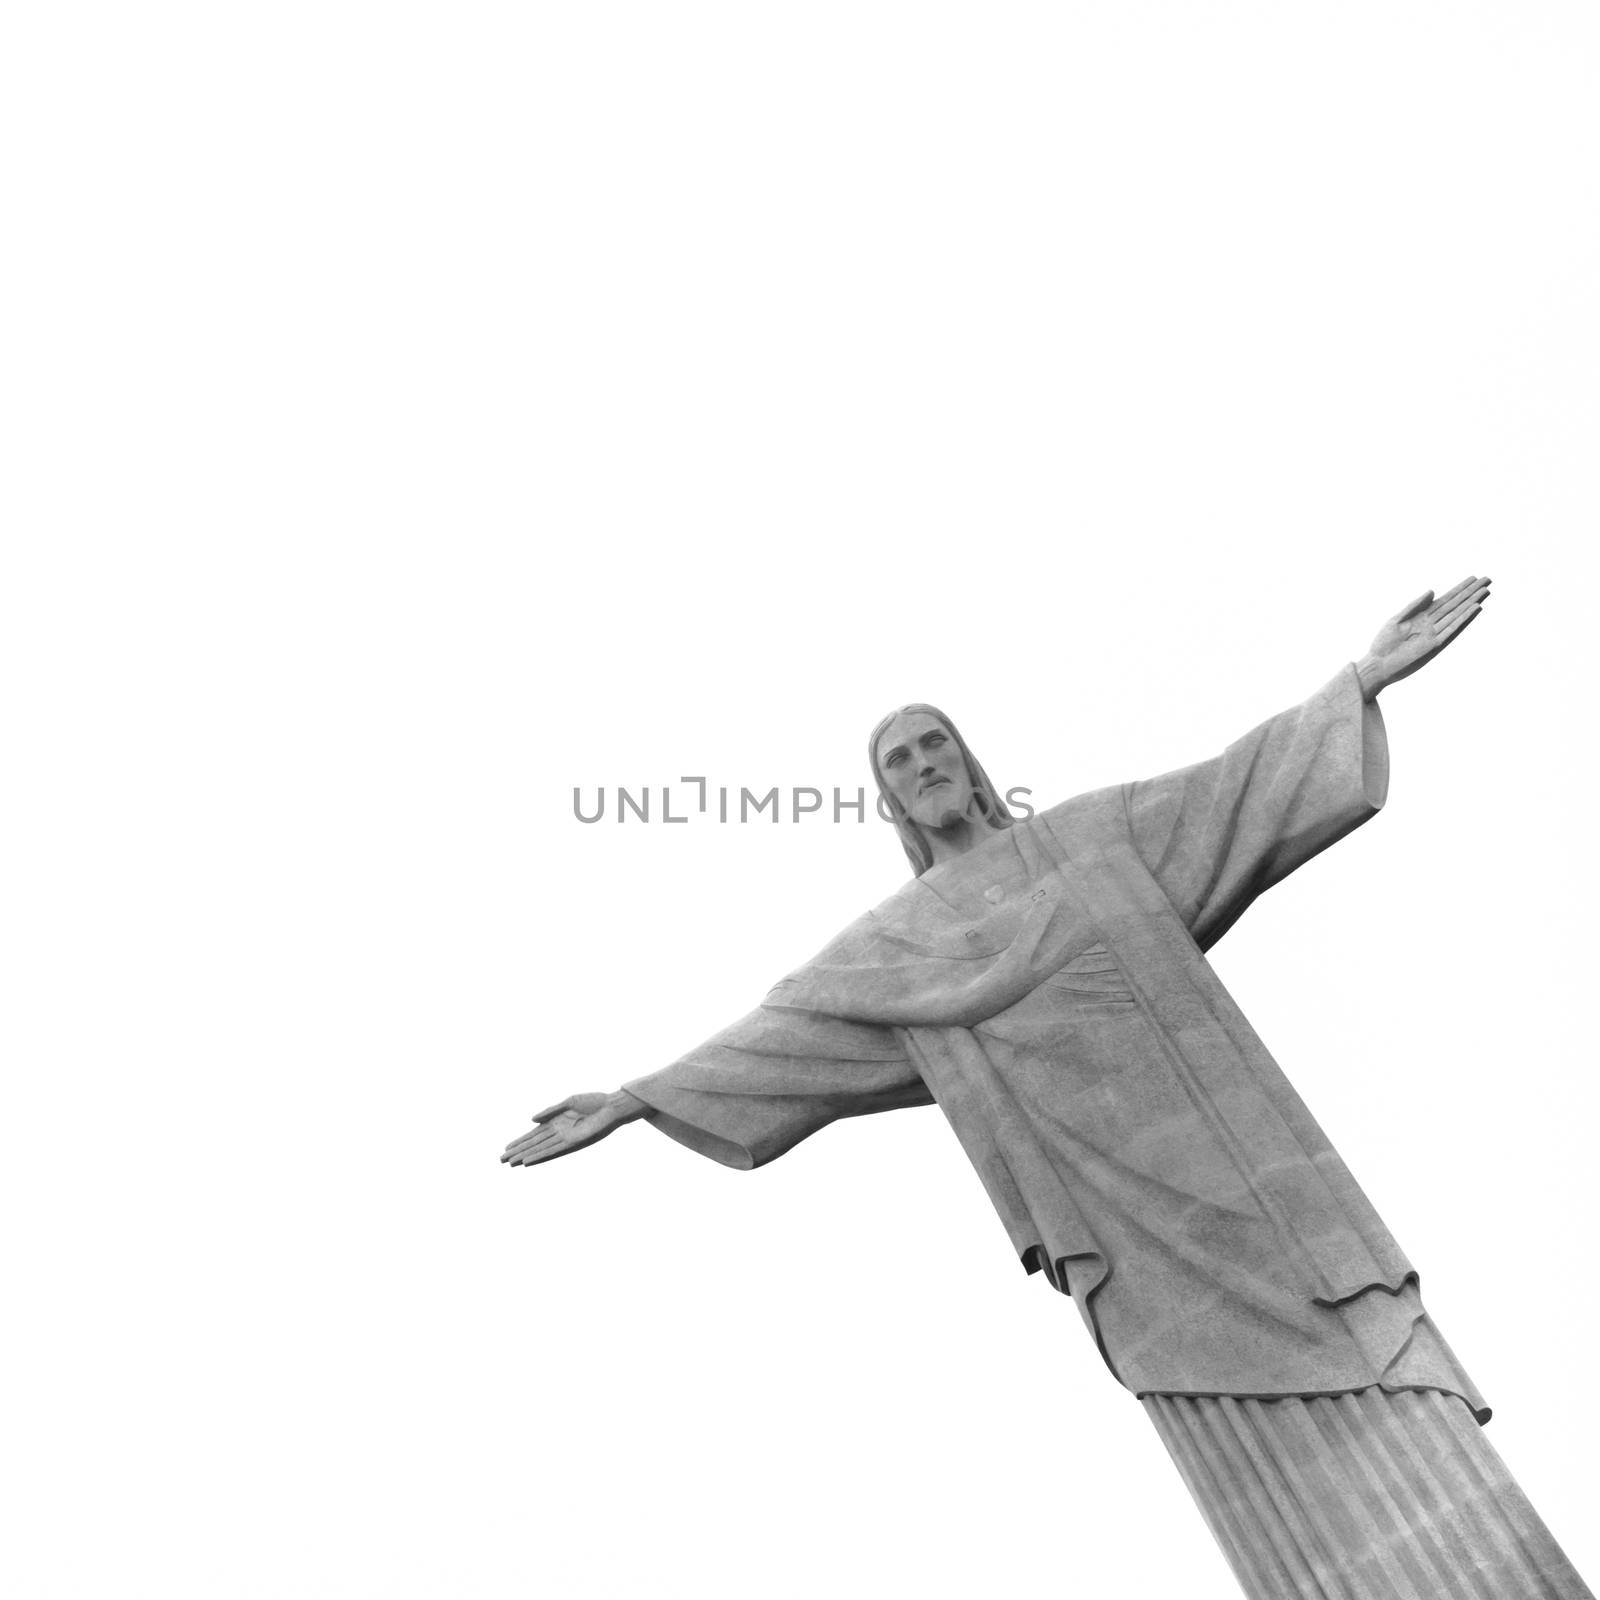 Christ the Redeemer Statue, Rio de Janeiro, Brazil by kasto